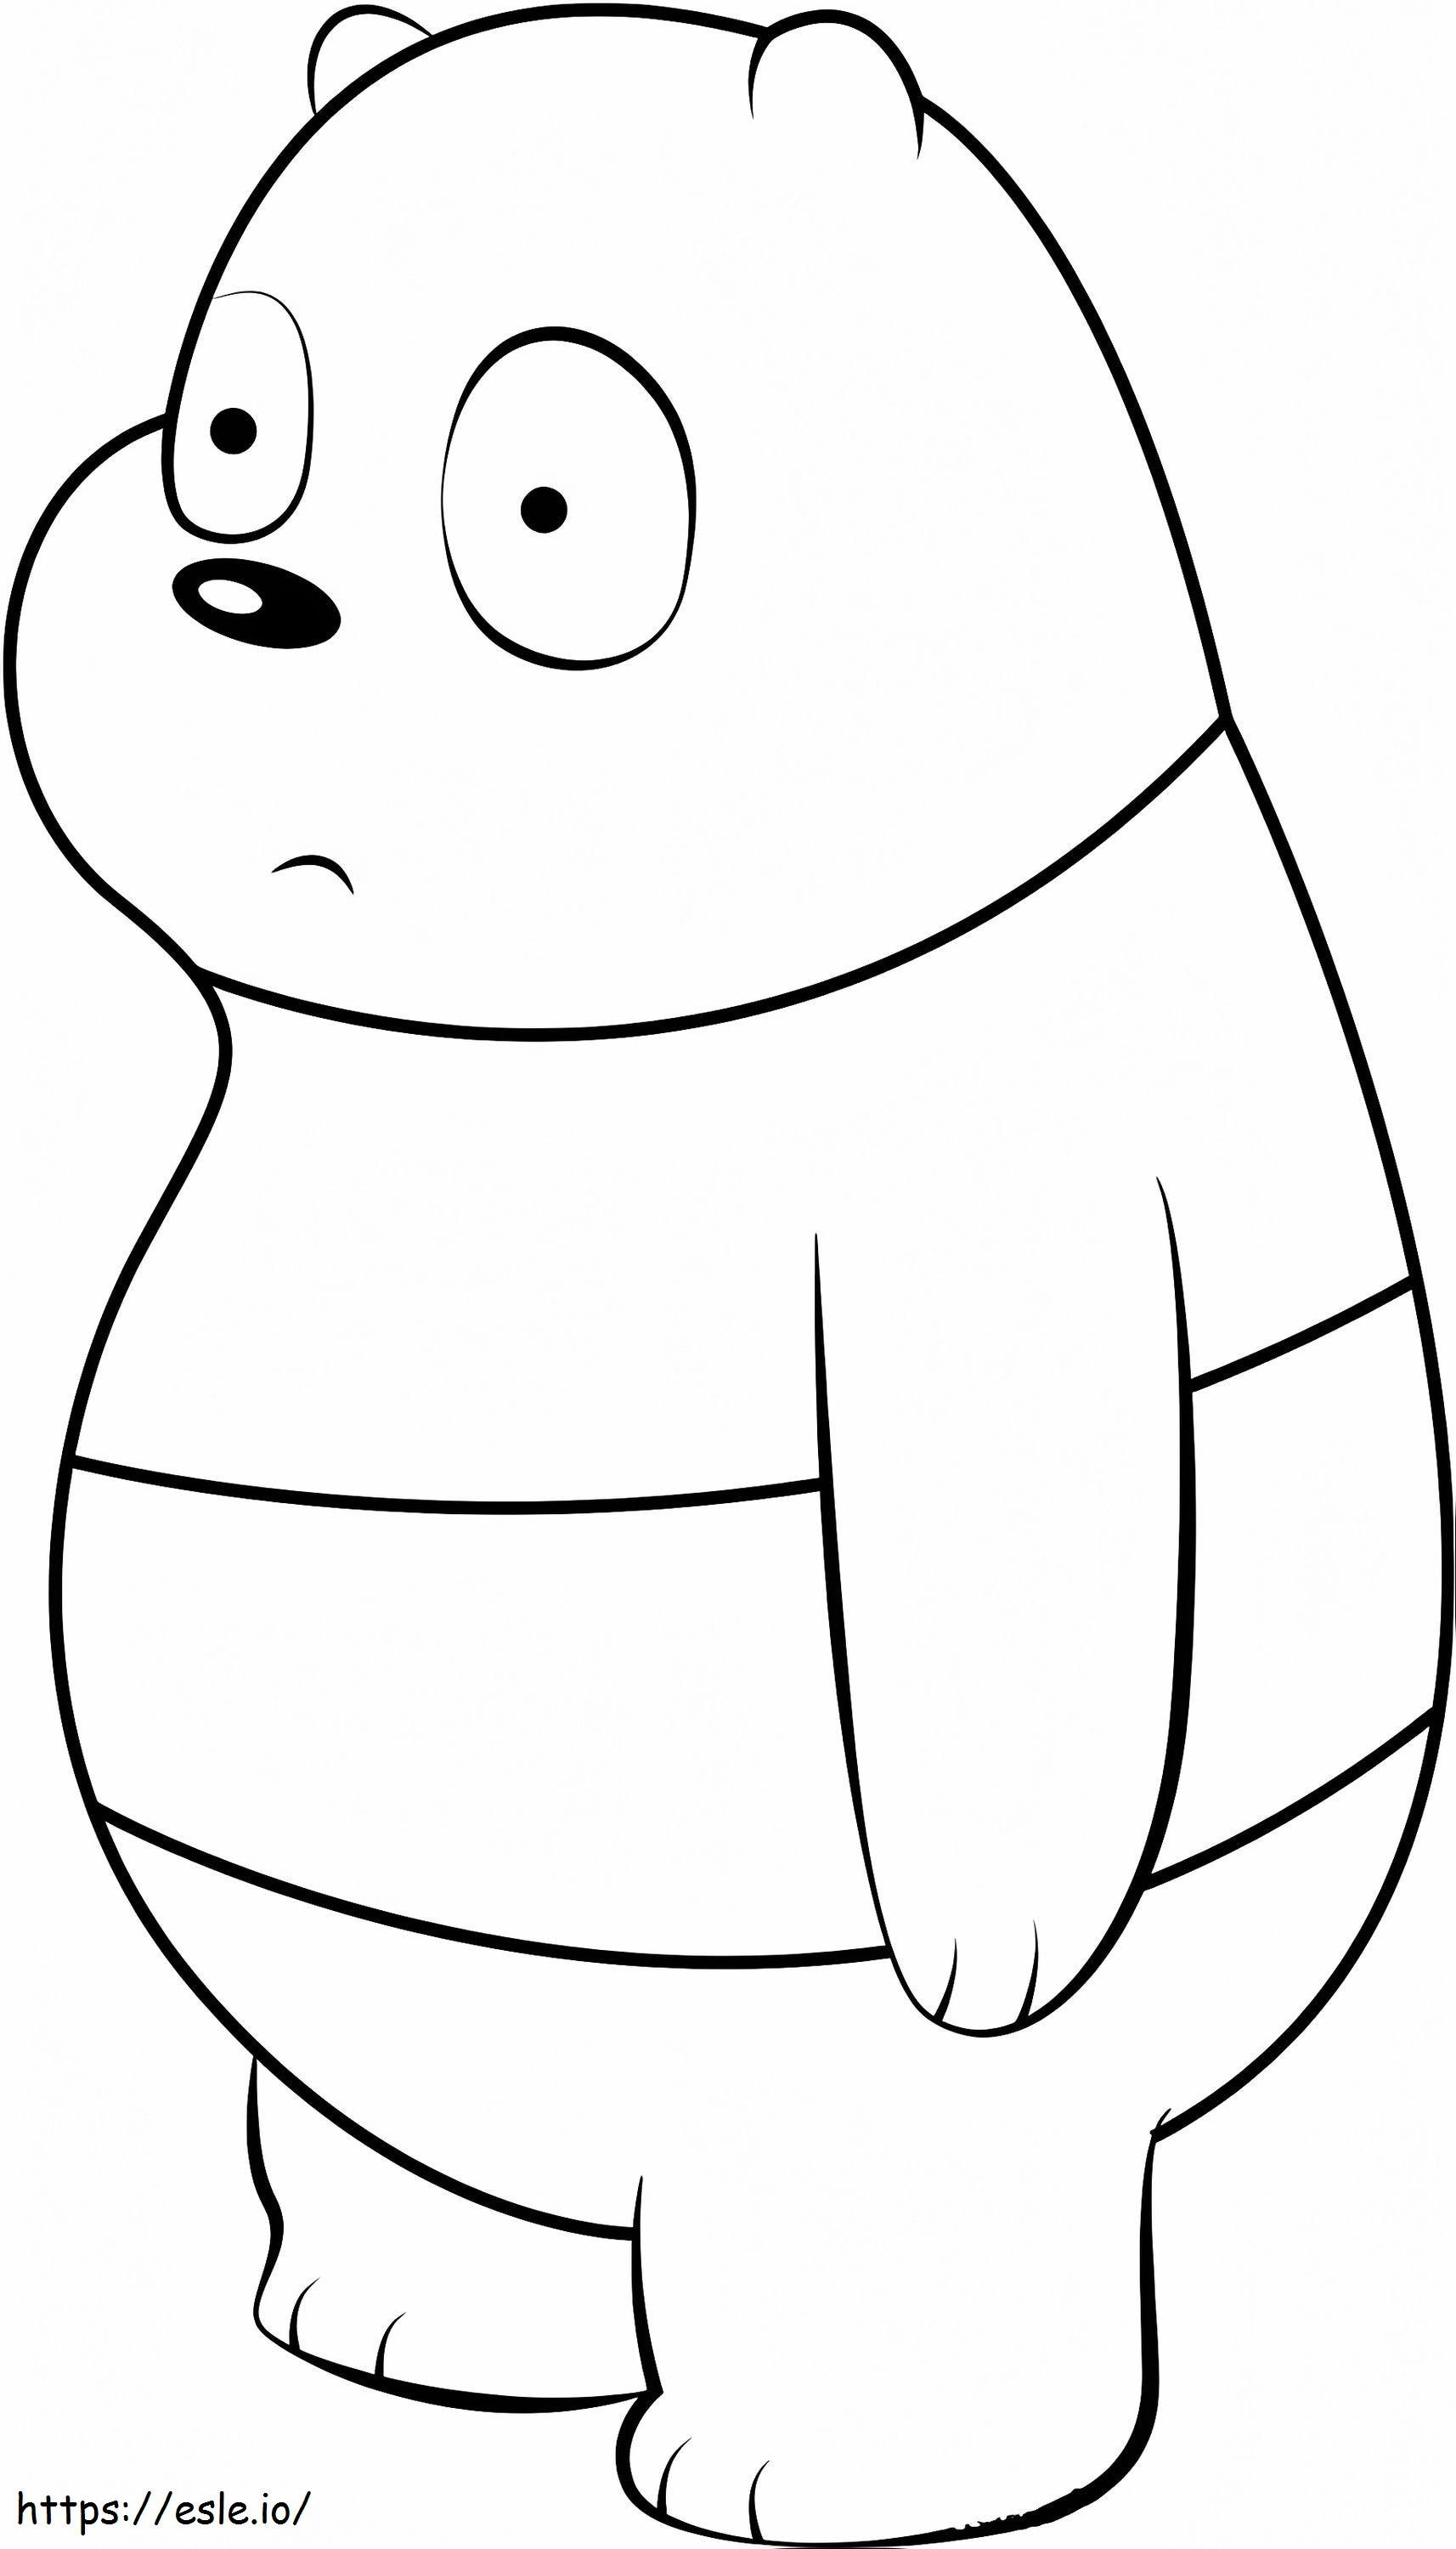 1531364963 Sad Panda Bear A4 coloring page